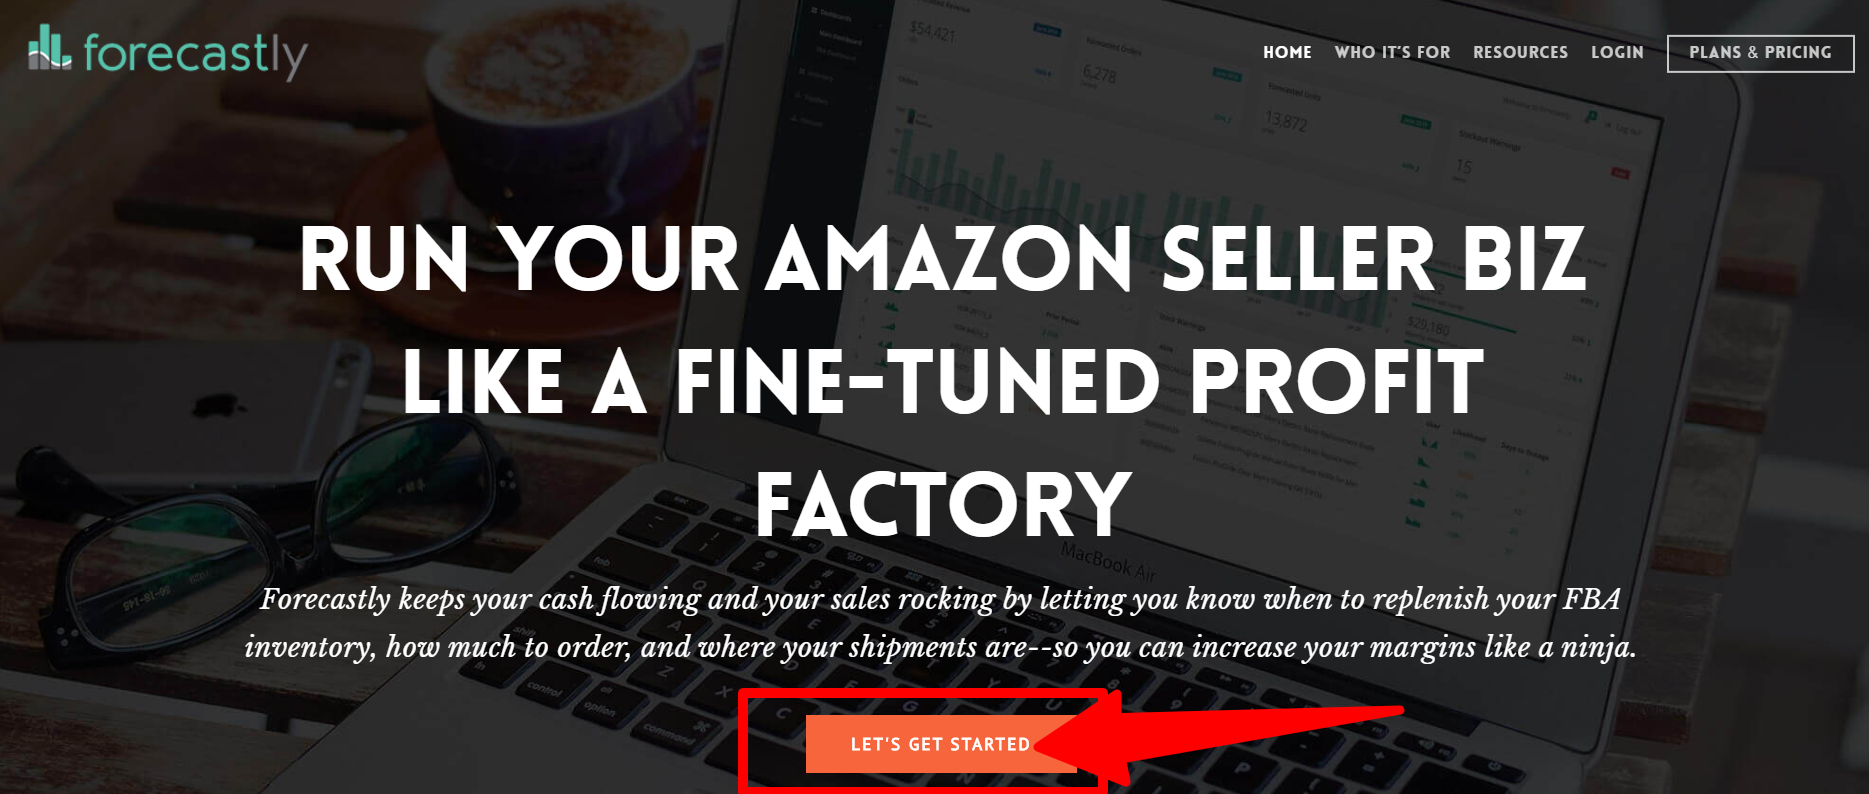 Amazon Analytics Tools- Forecastly